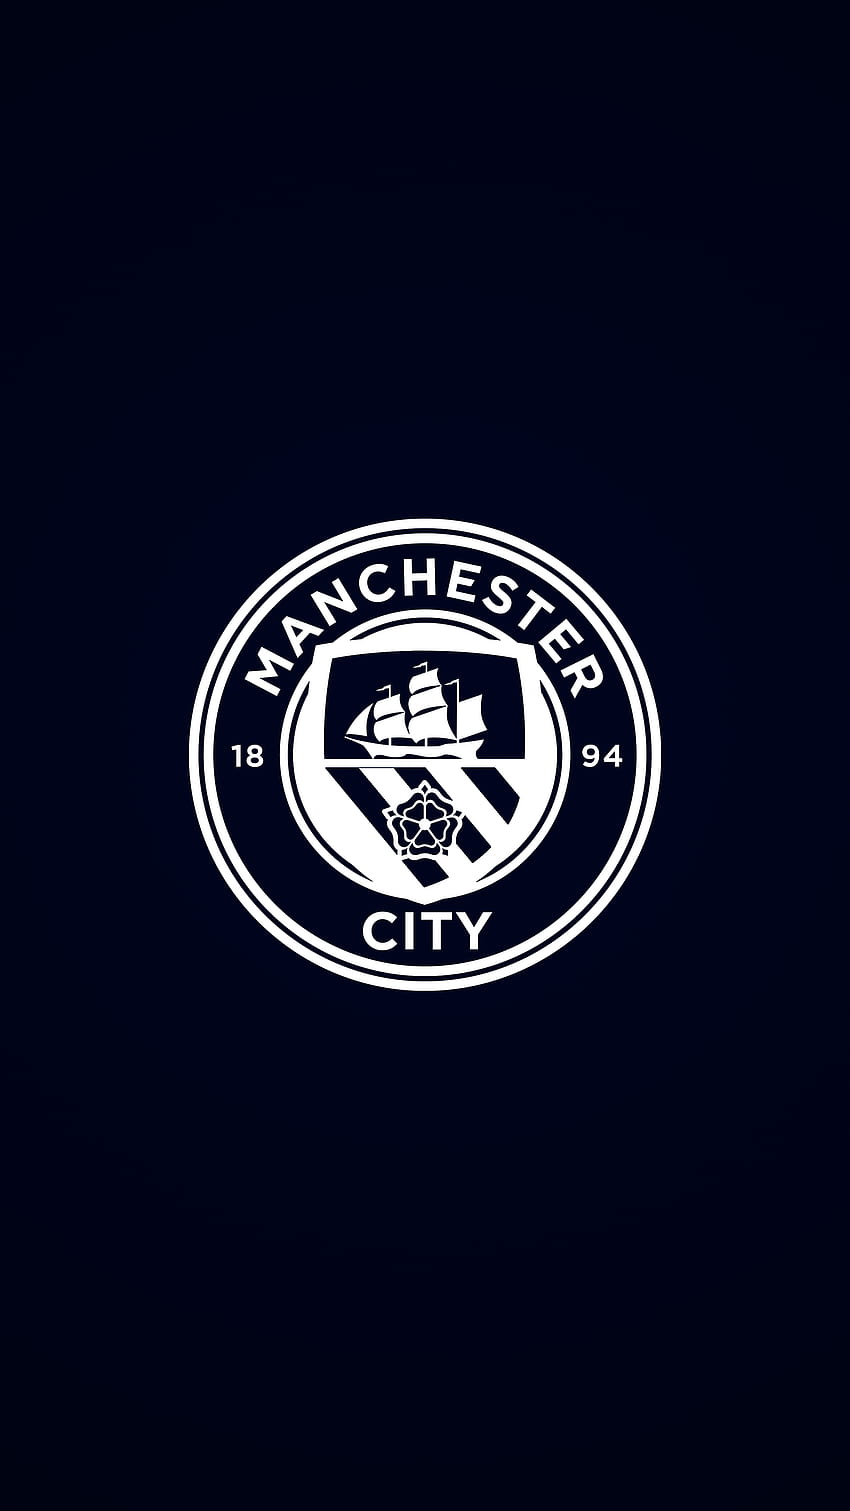 Pin oleh Caz B di City. Pemain sepak bola, Sepak bola, logotipo de Desain, Manchester City fondo de pantalla del teléfono